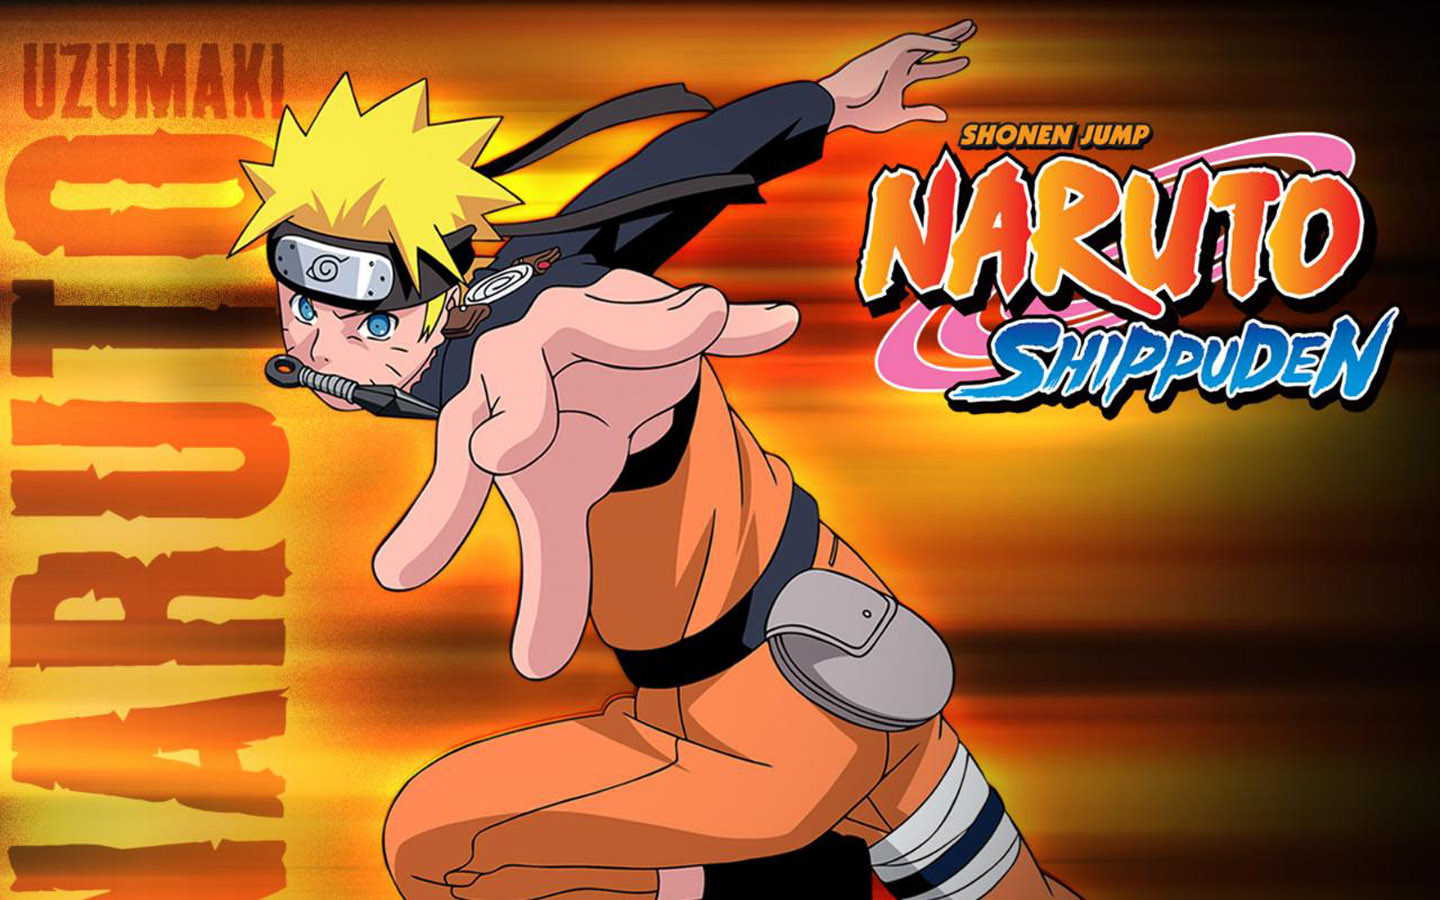 Naruto computer desktop wallpaper